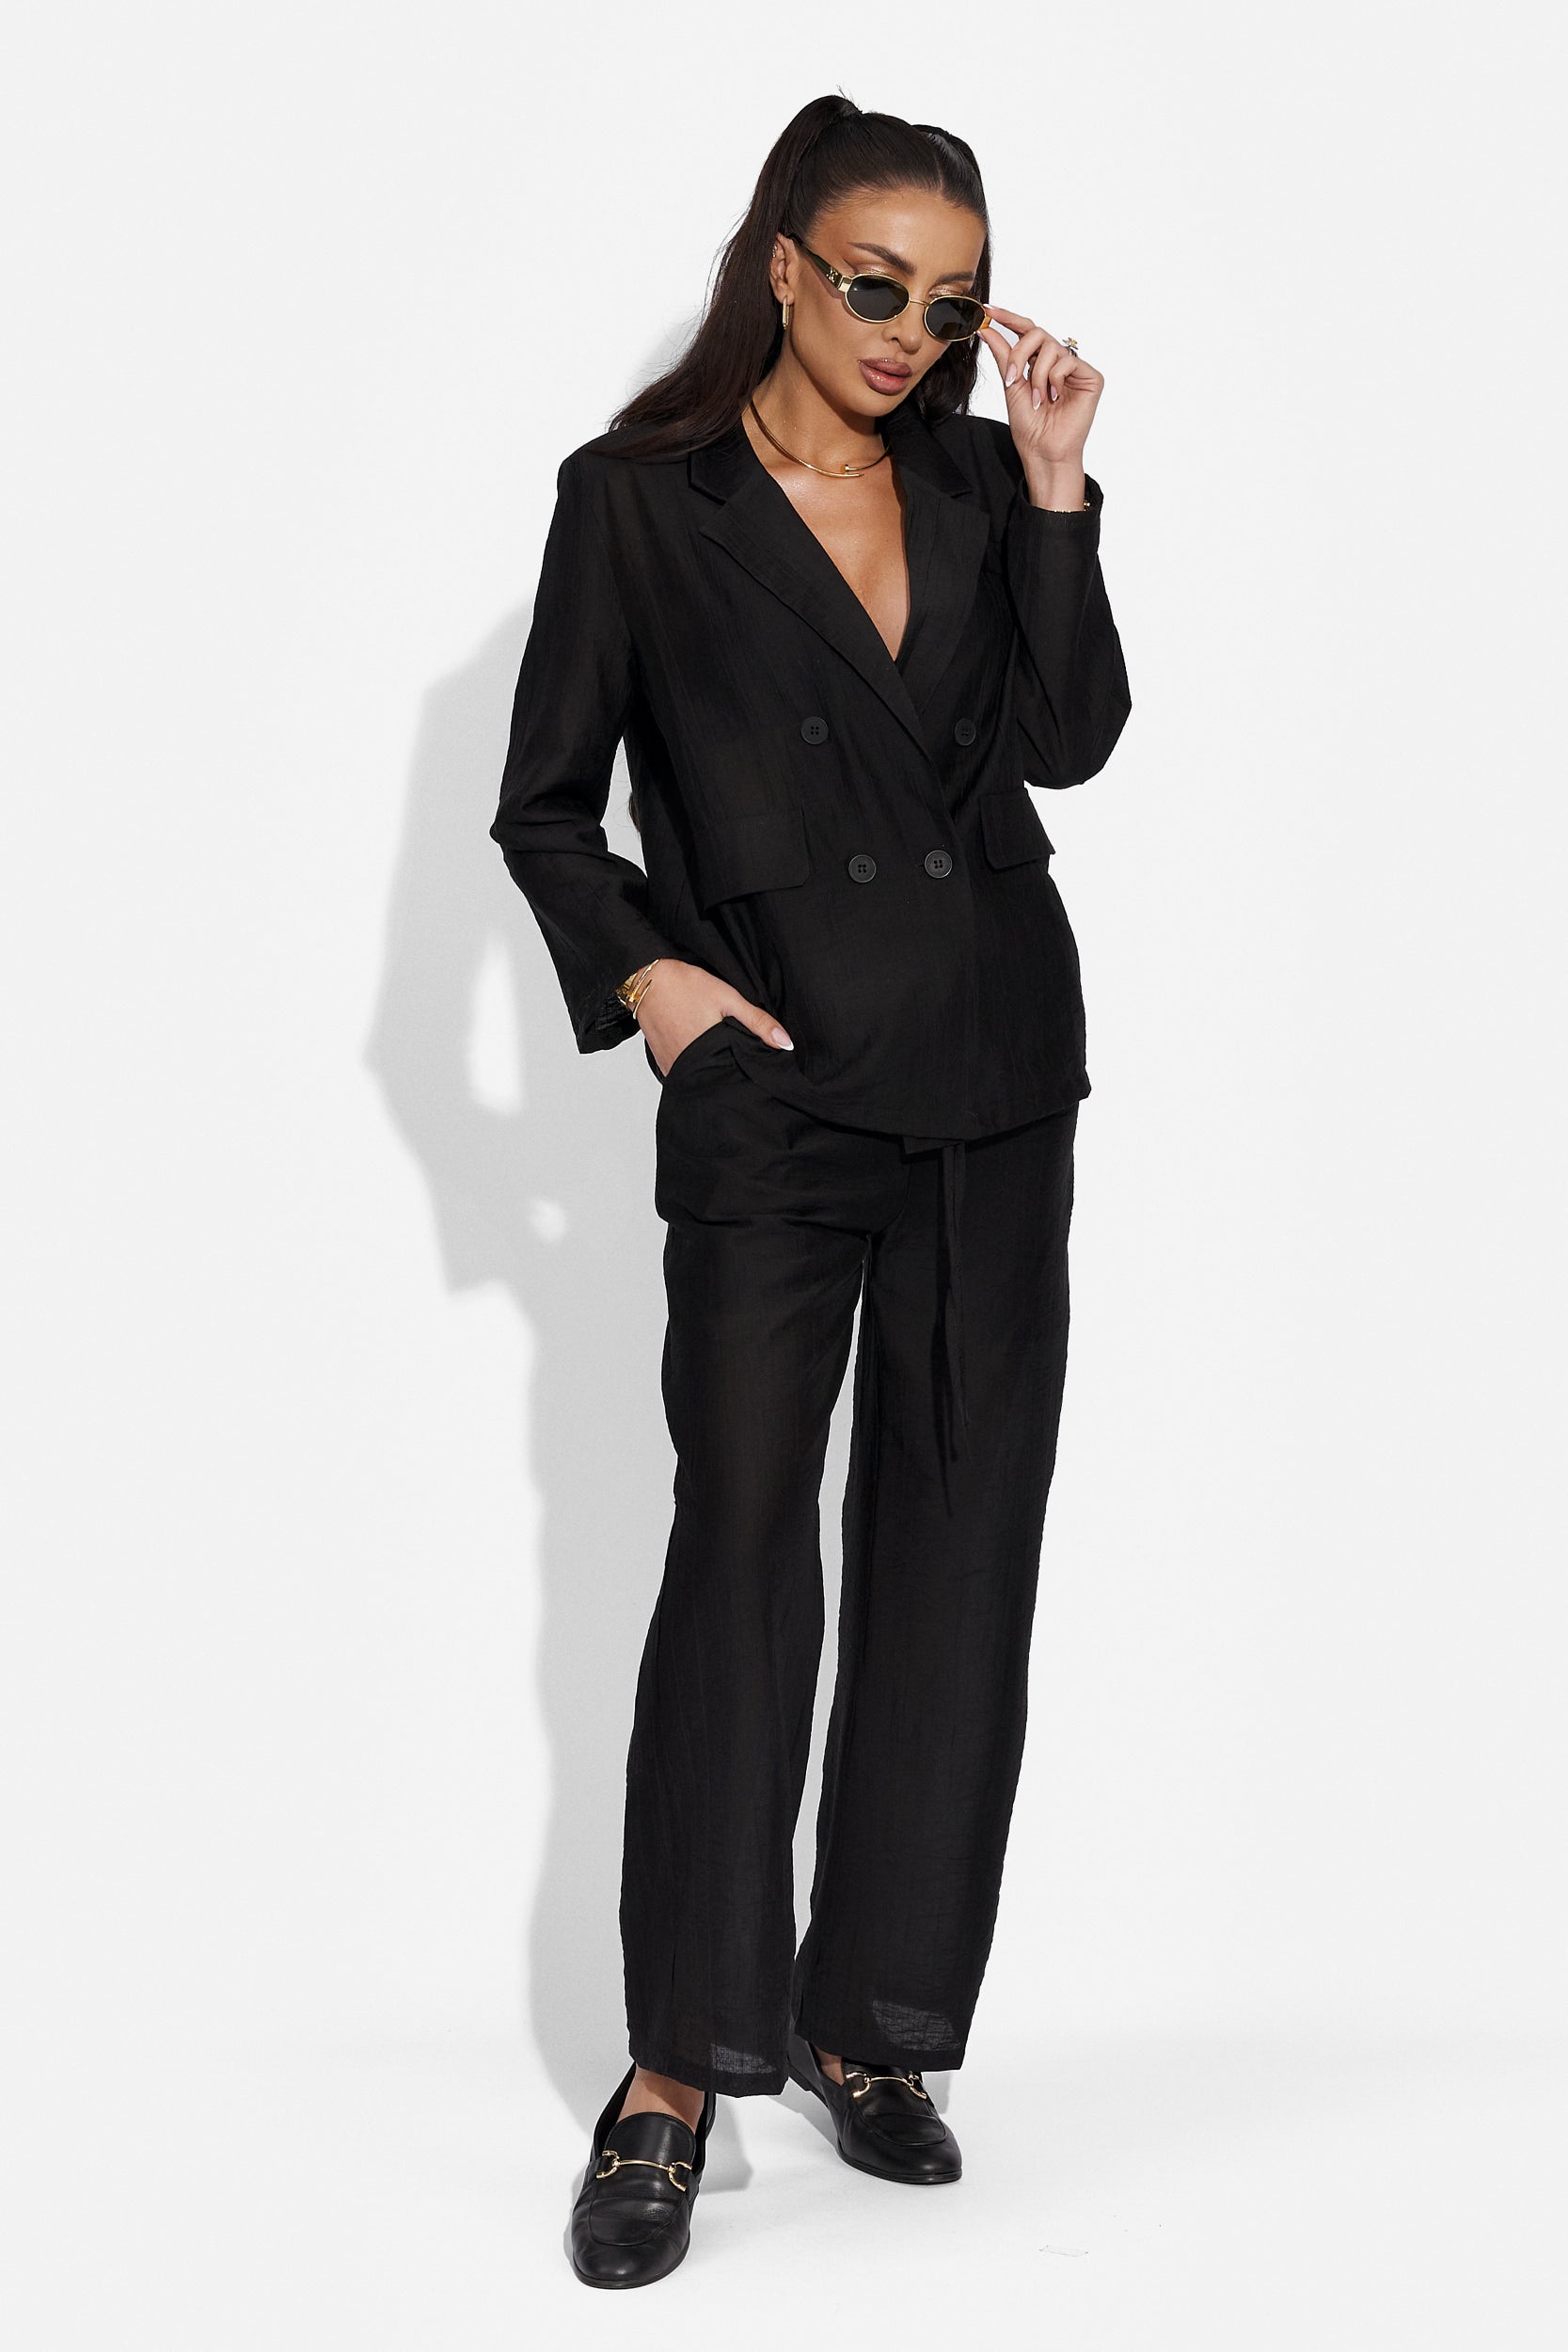 Ladies' elegant black pants suit Salesa Bogas